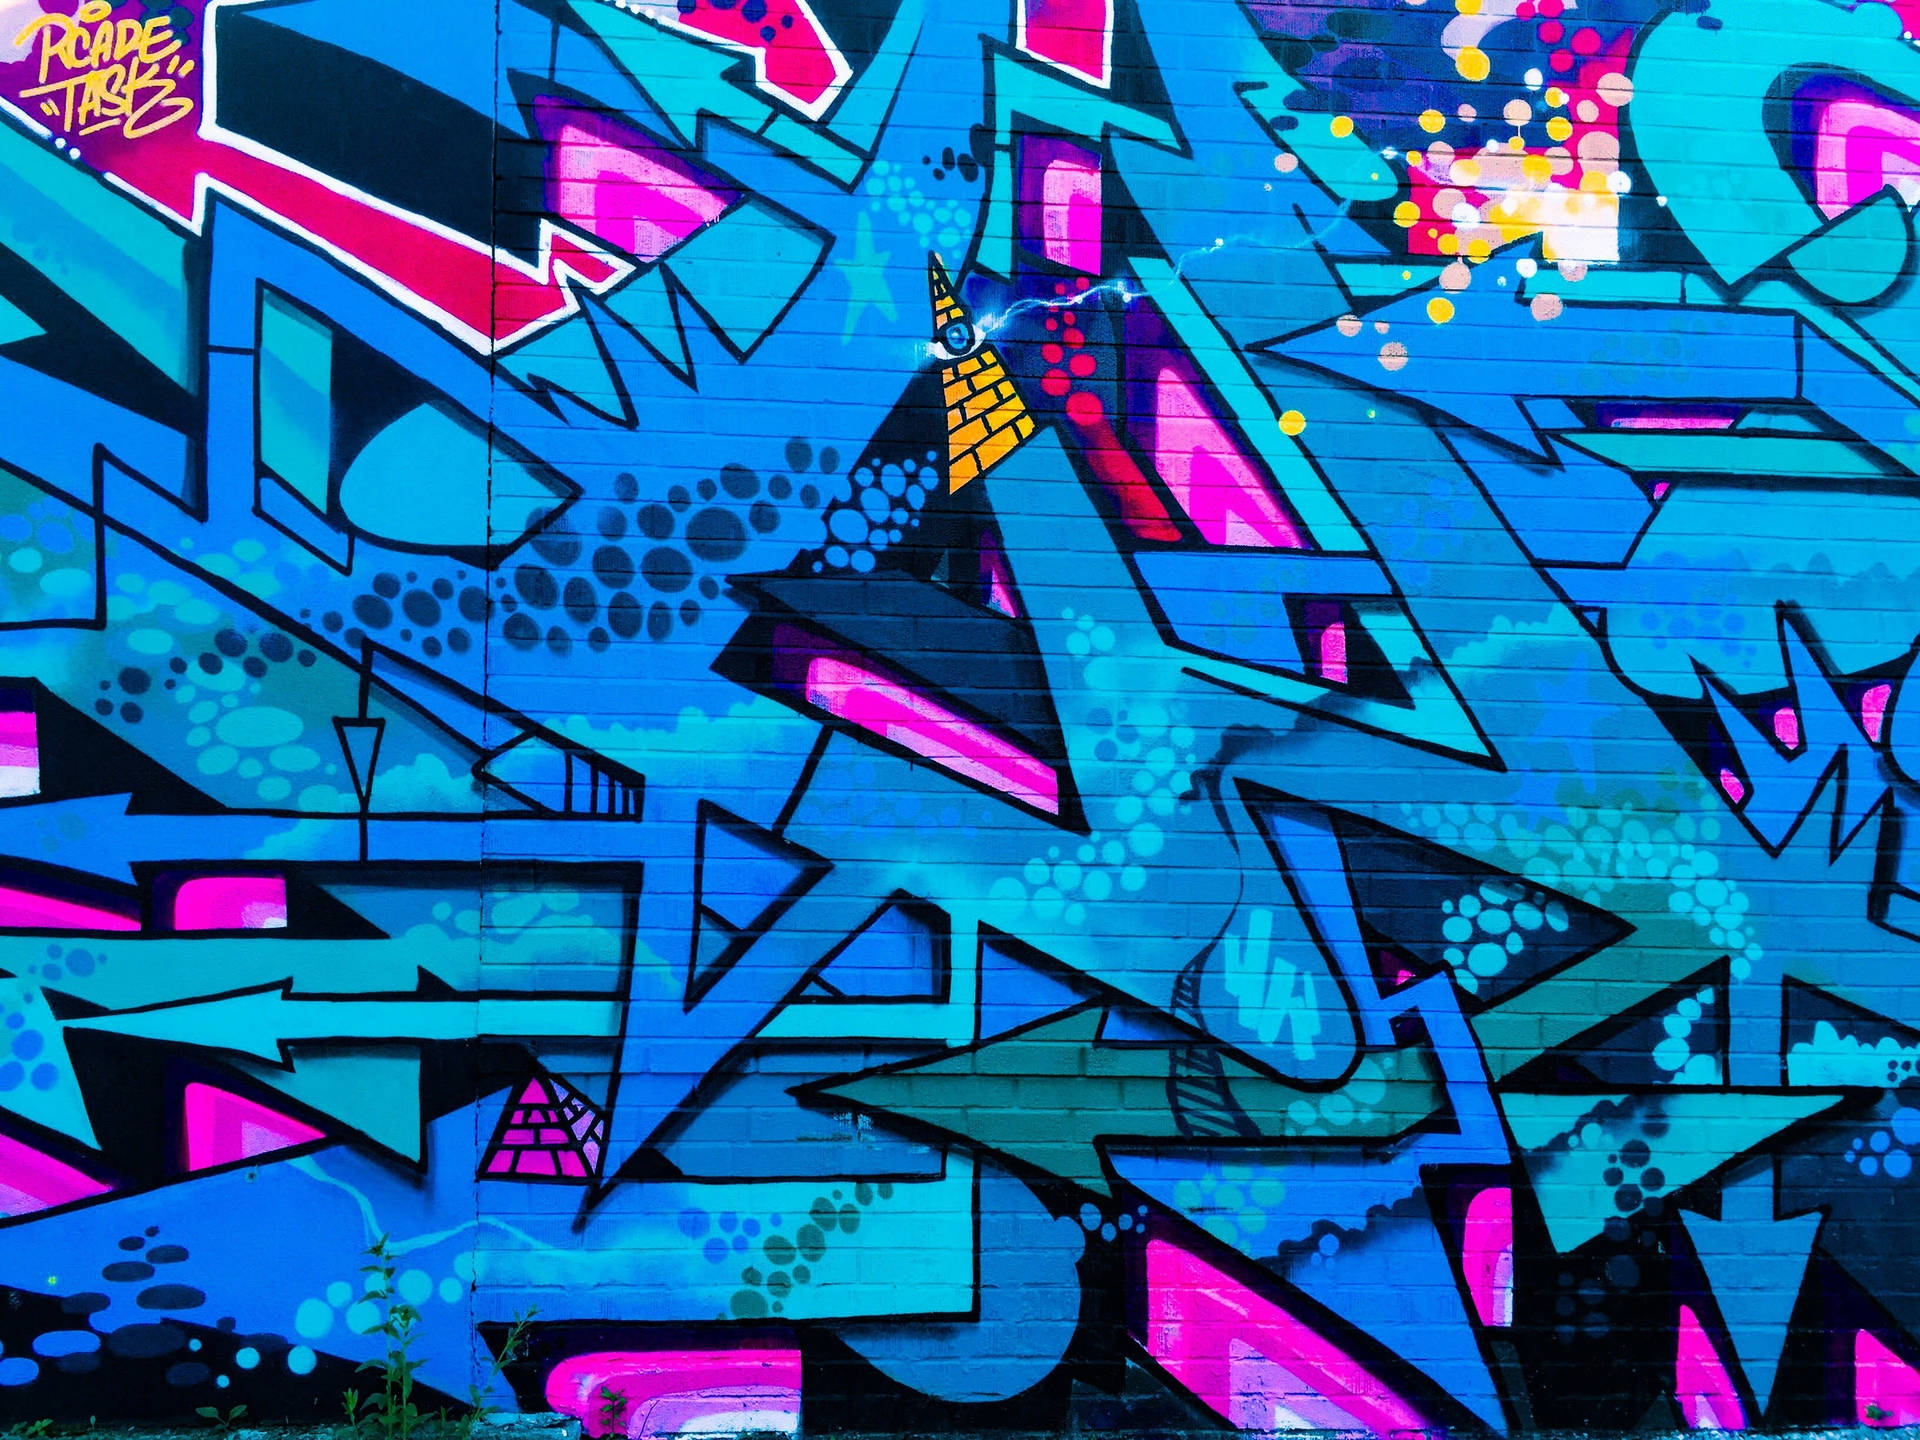 Graffiti 3264X2448 Wallpaper and Background Image